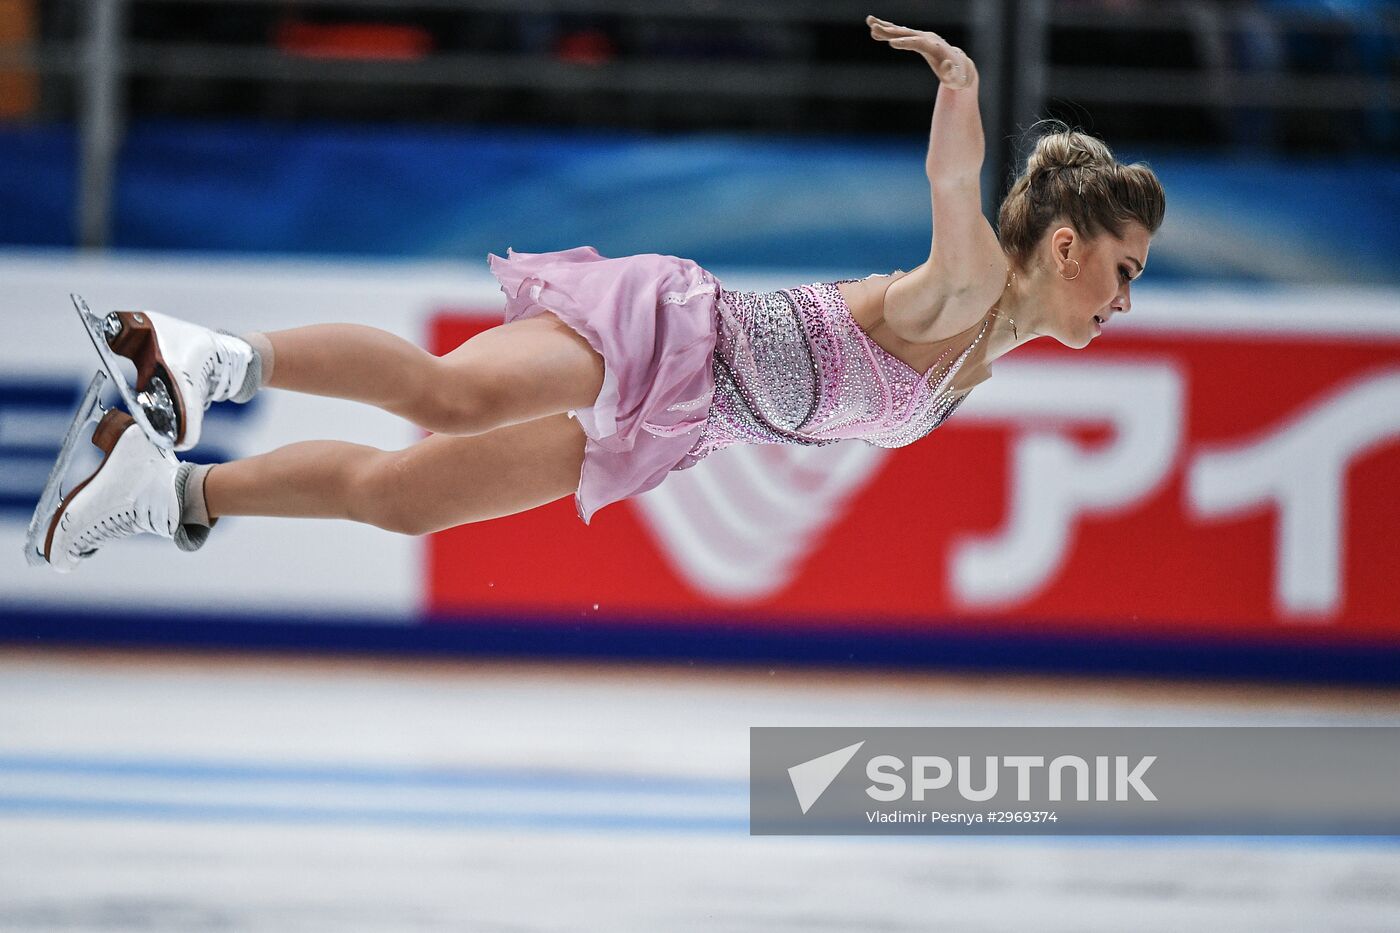 Grand Prix of Figure Skating. Stage 3. Women's free skating